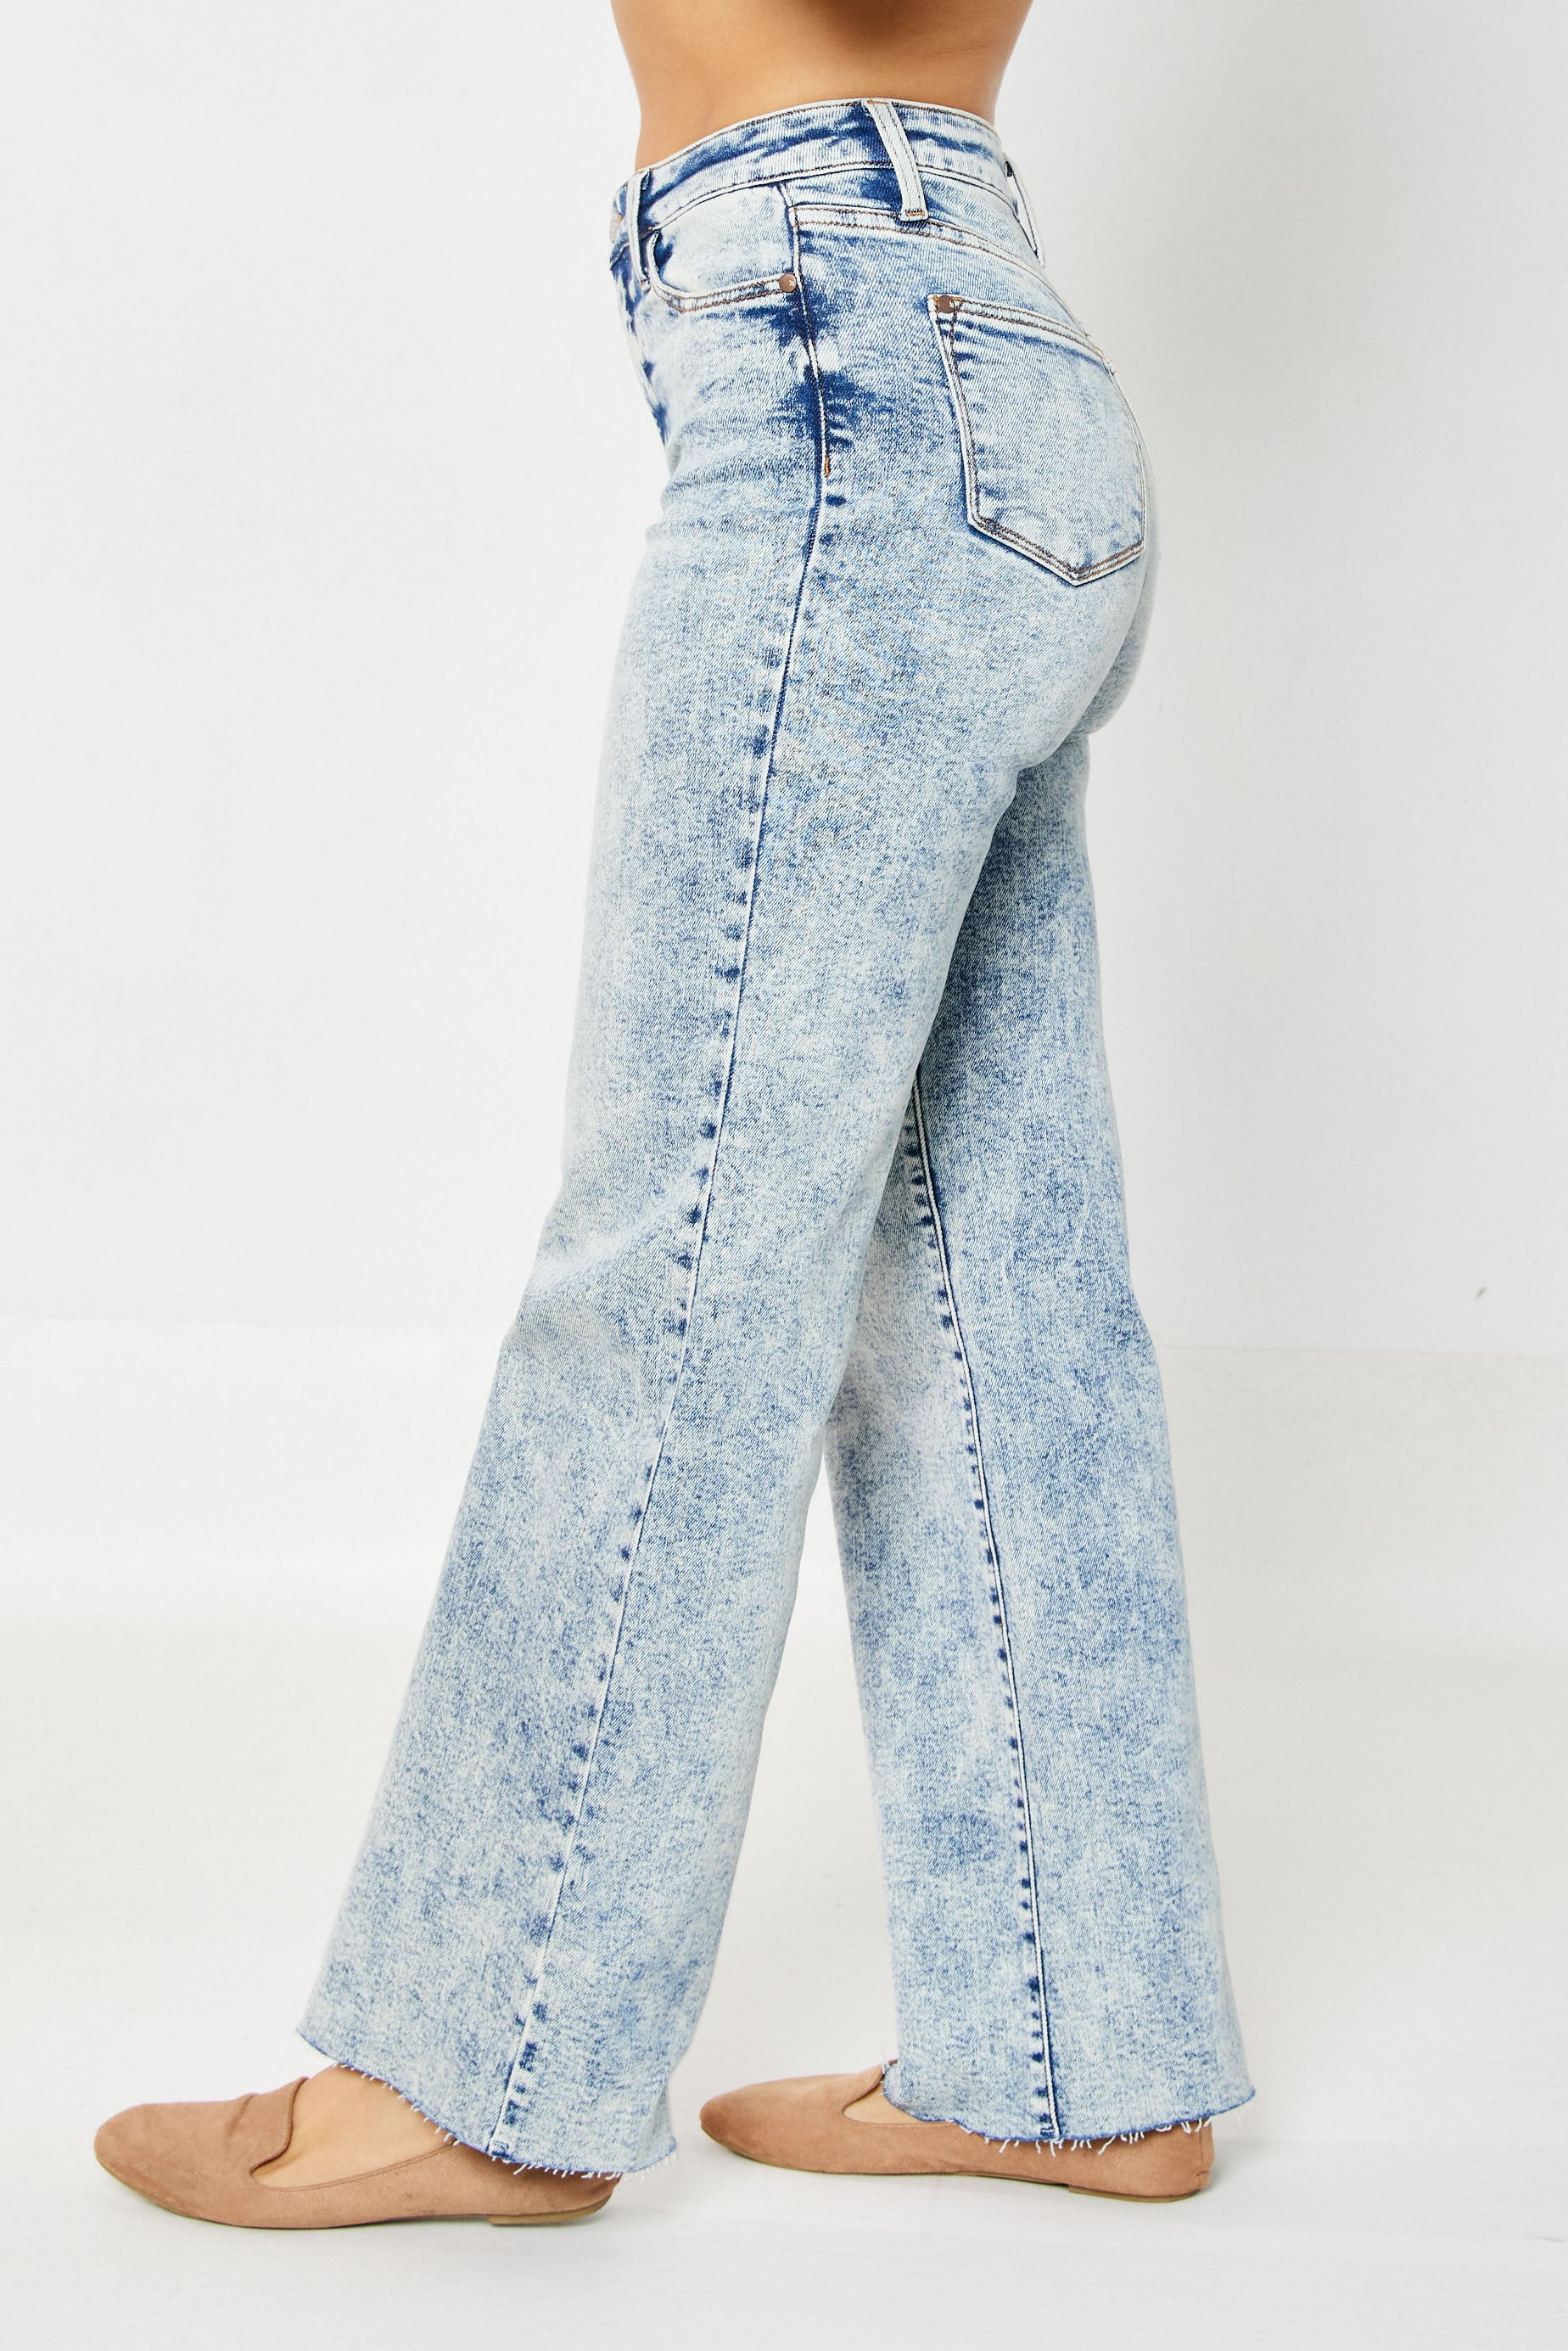 Hamble Capri Denim Jeans